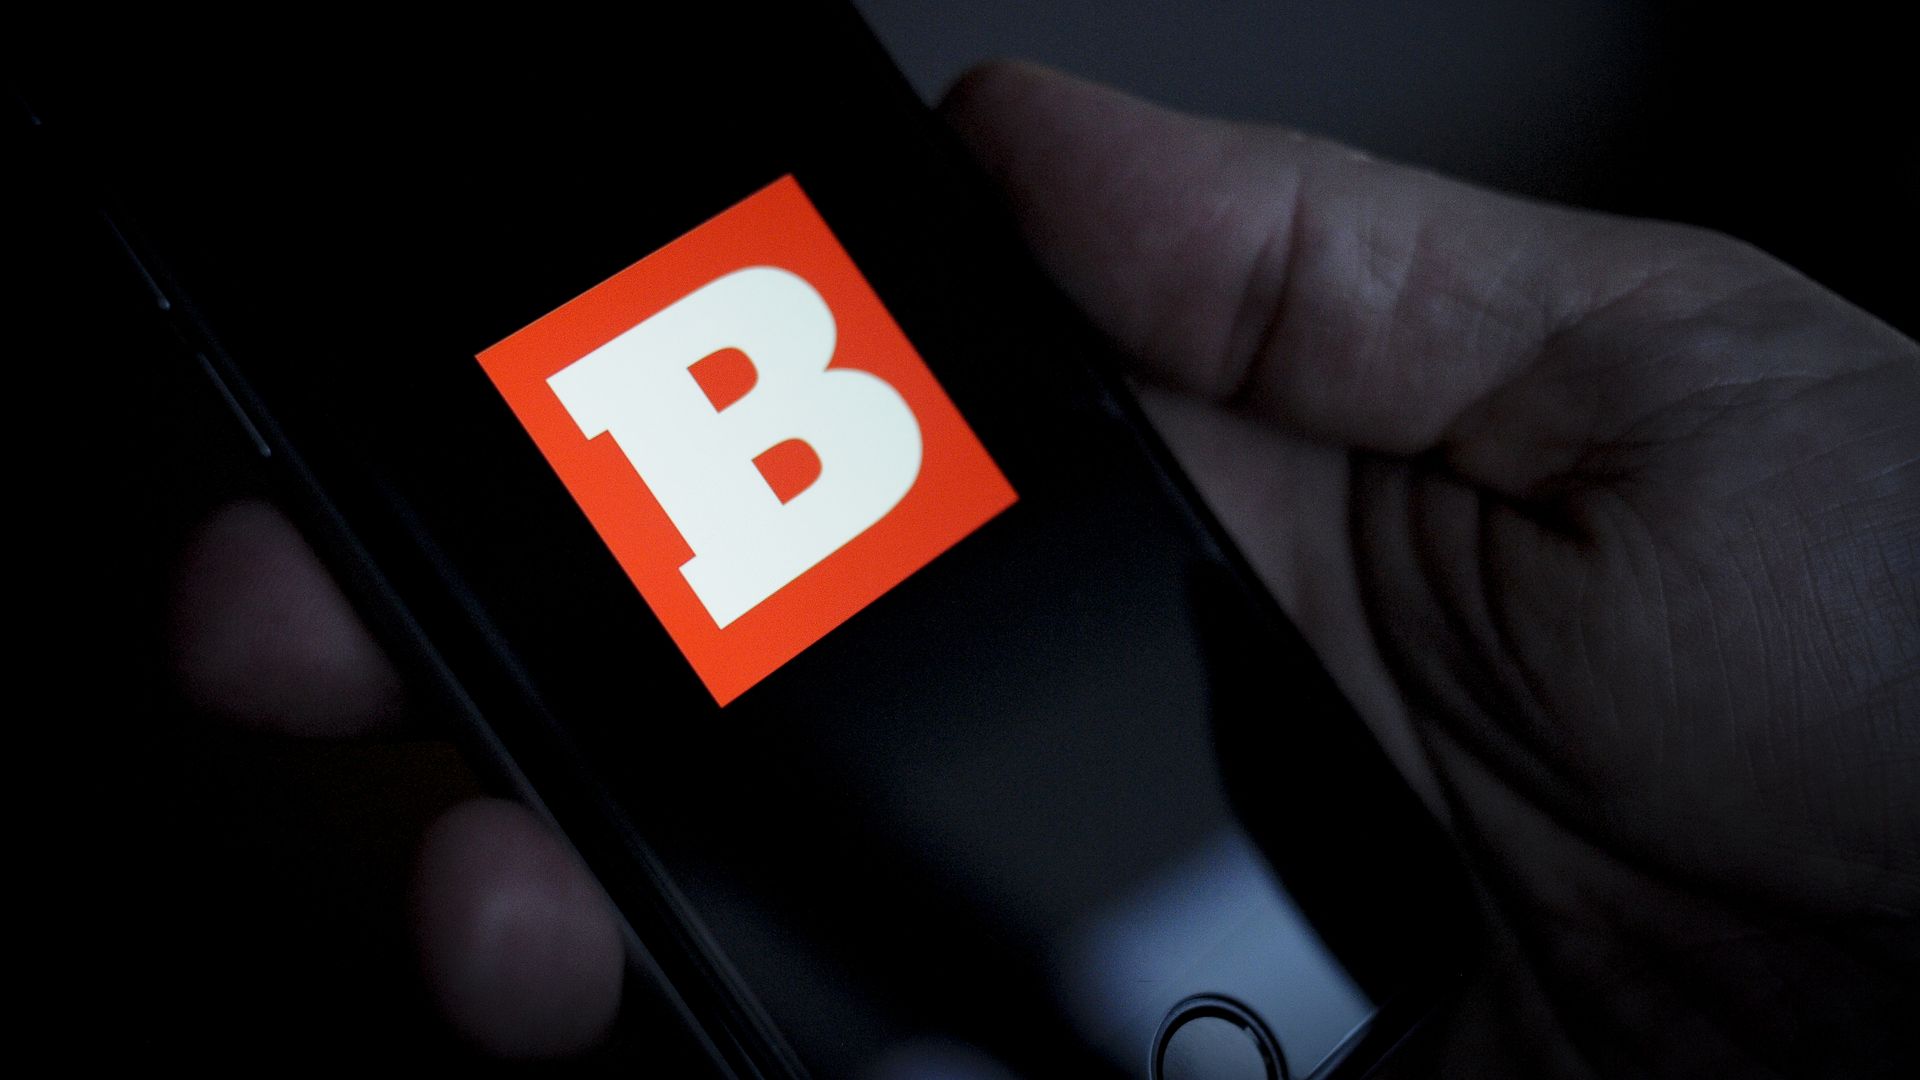 The Breitbart logo is seen on an iPhone 